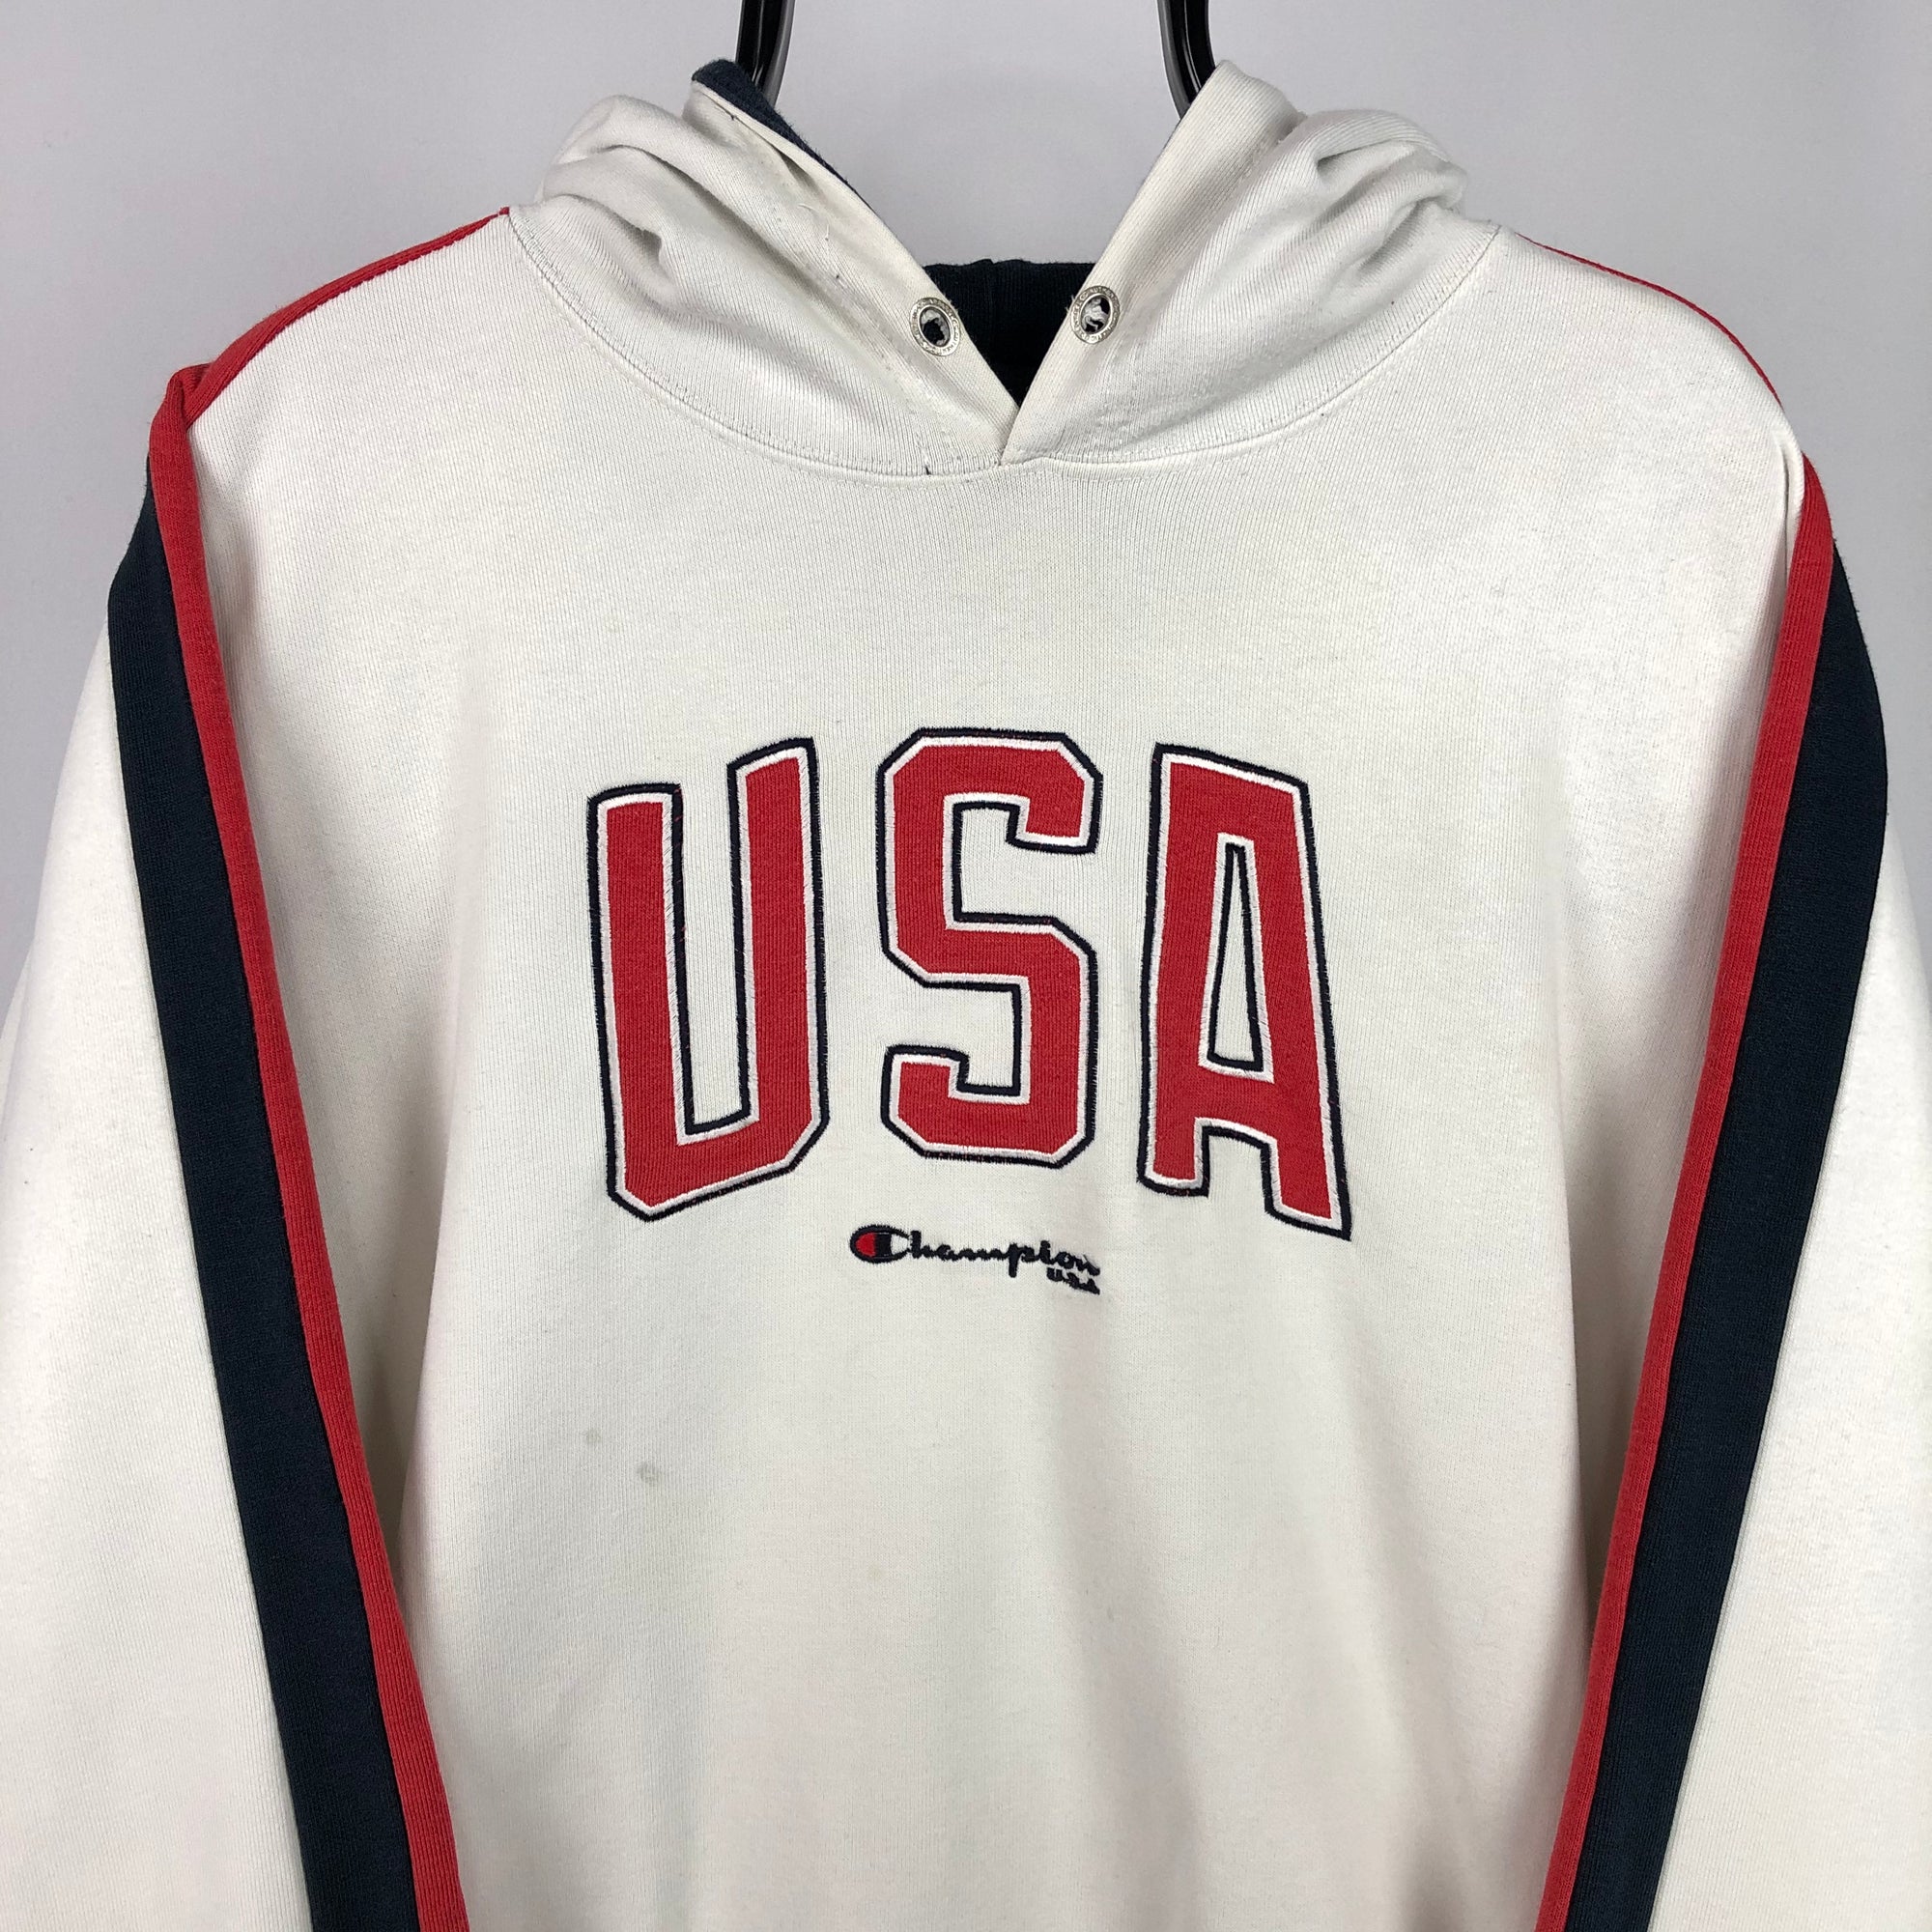 Vintage Champion 'USA' Hoodie in White/Red/Navy - Men's Medium/Women's Large